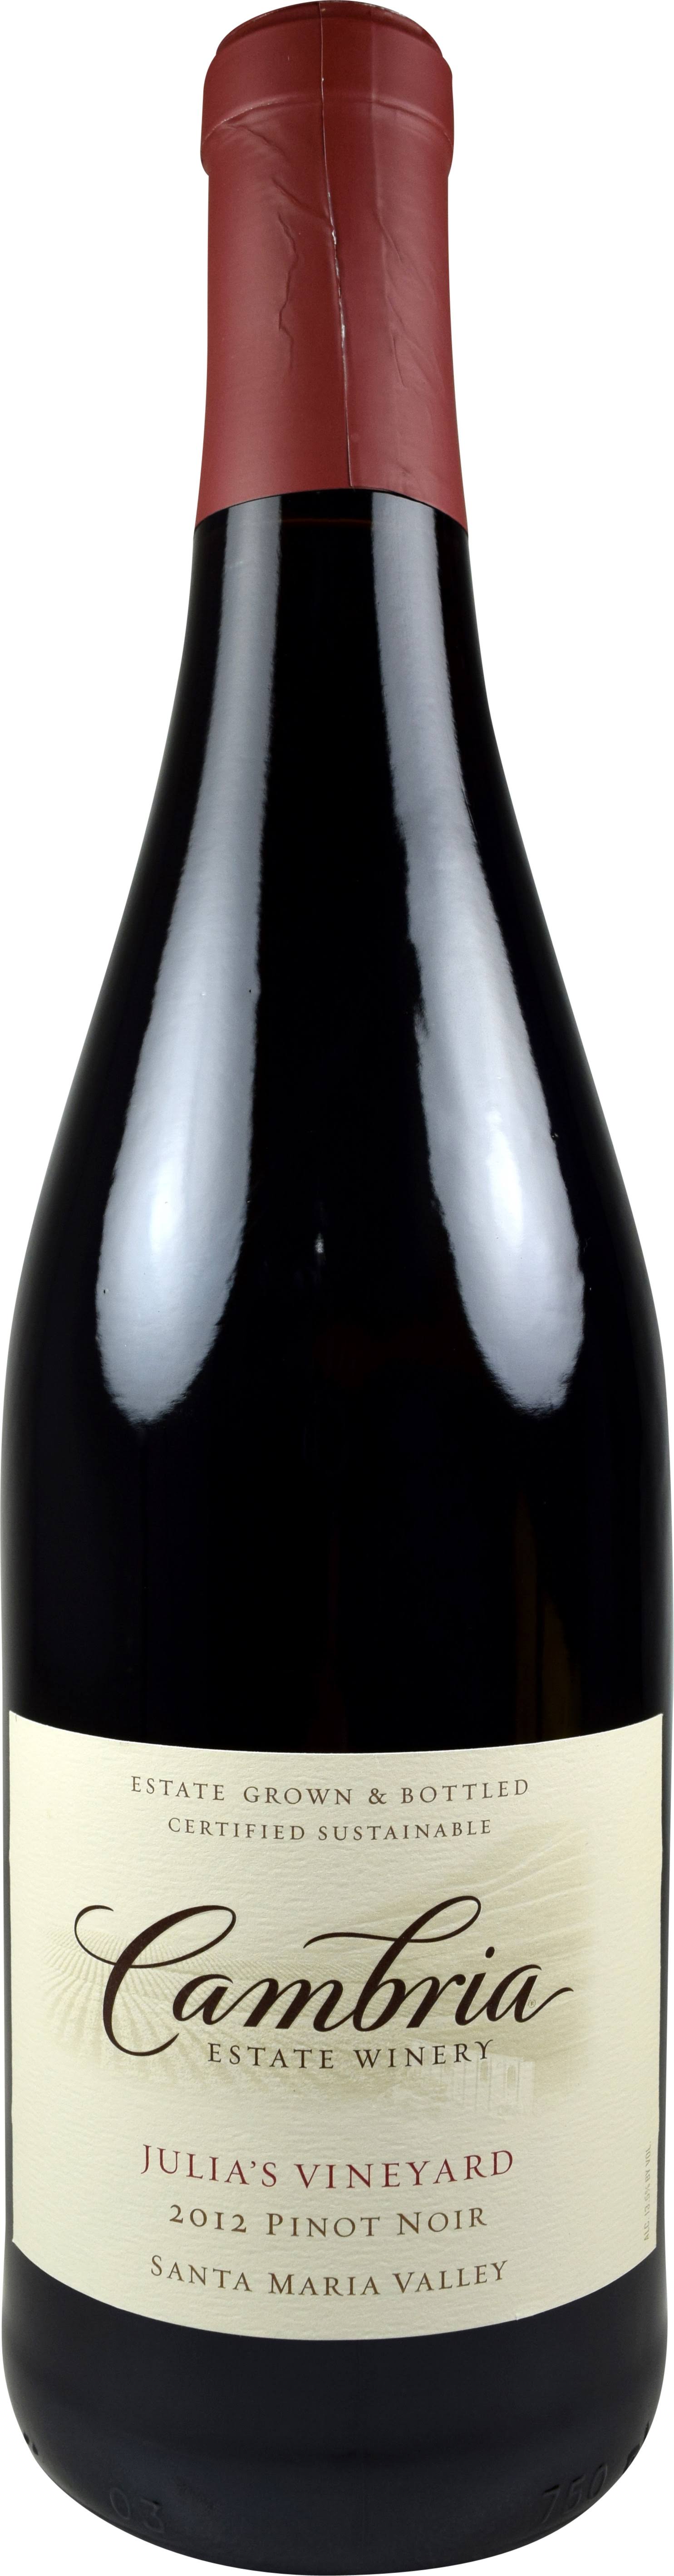 Cambria Julia's Vineyard Pinot Noir, Santa Maria Valley, 2004 - 750 ml